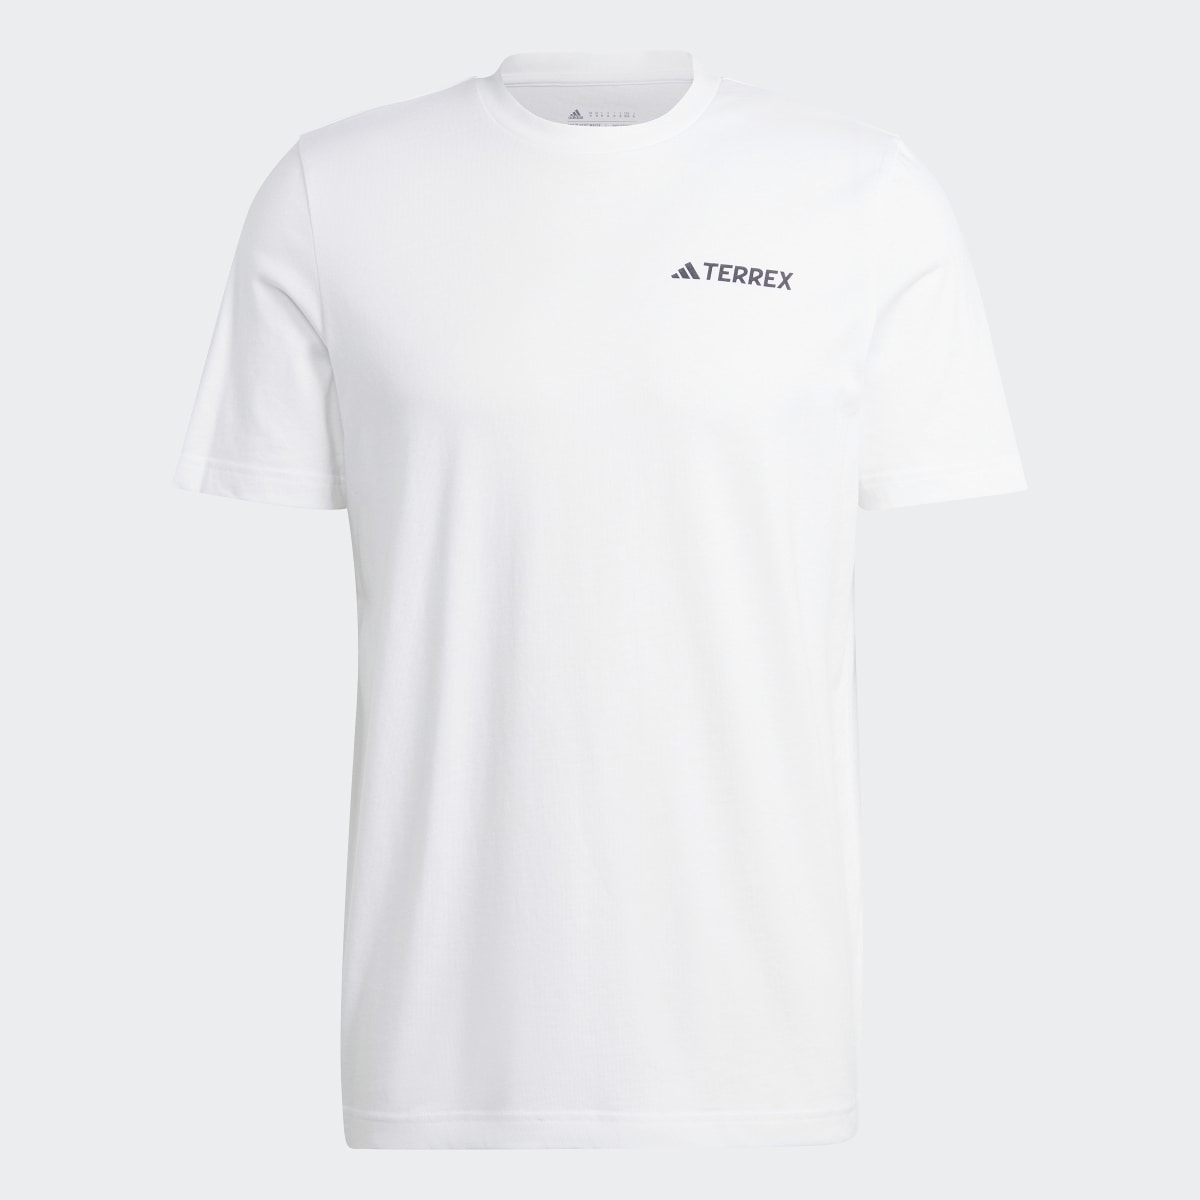 Adidas T-shirt MTN 2.0 TERREX. 5